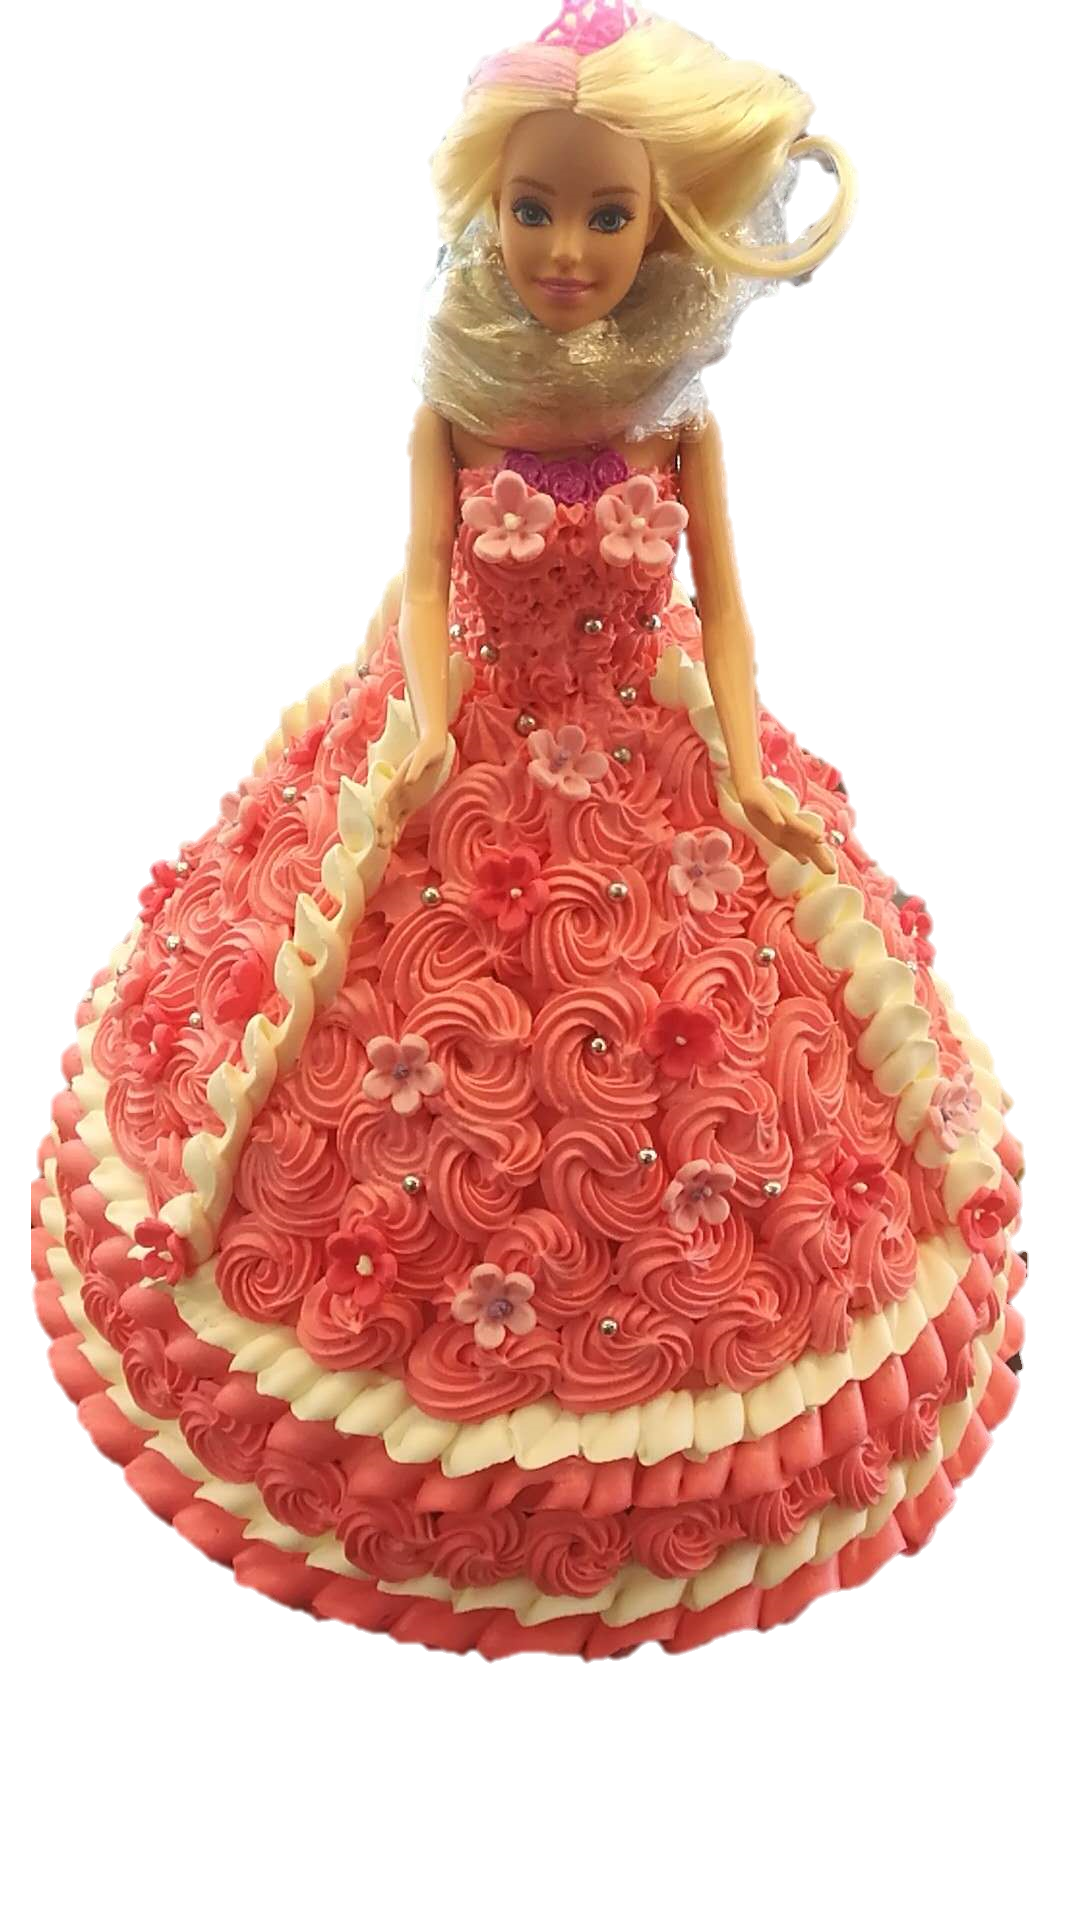 3D Princess Doll Buttercream Cake - White Spatula